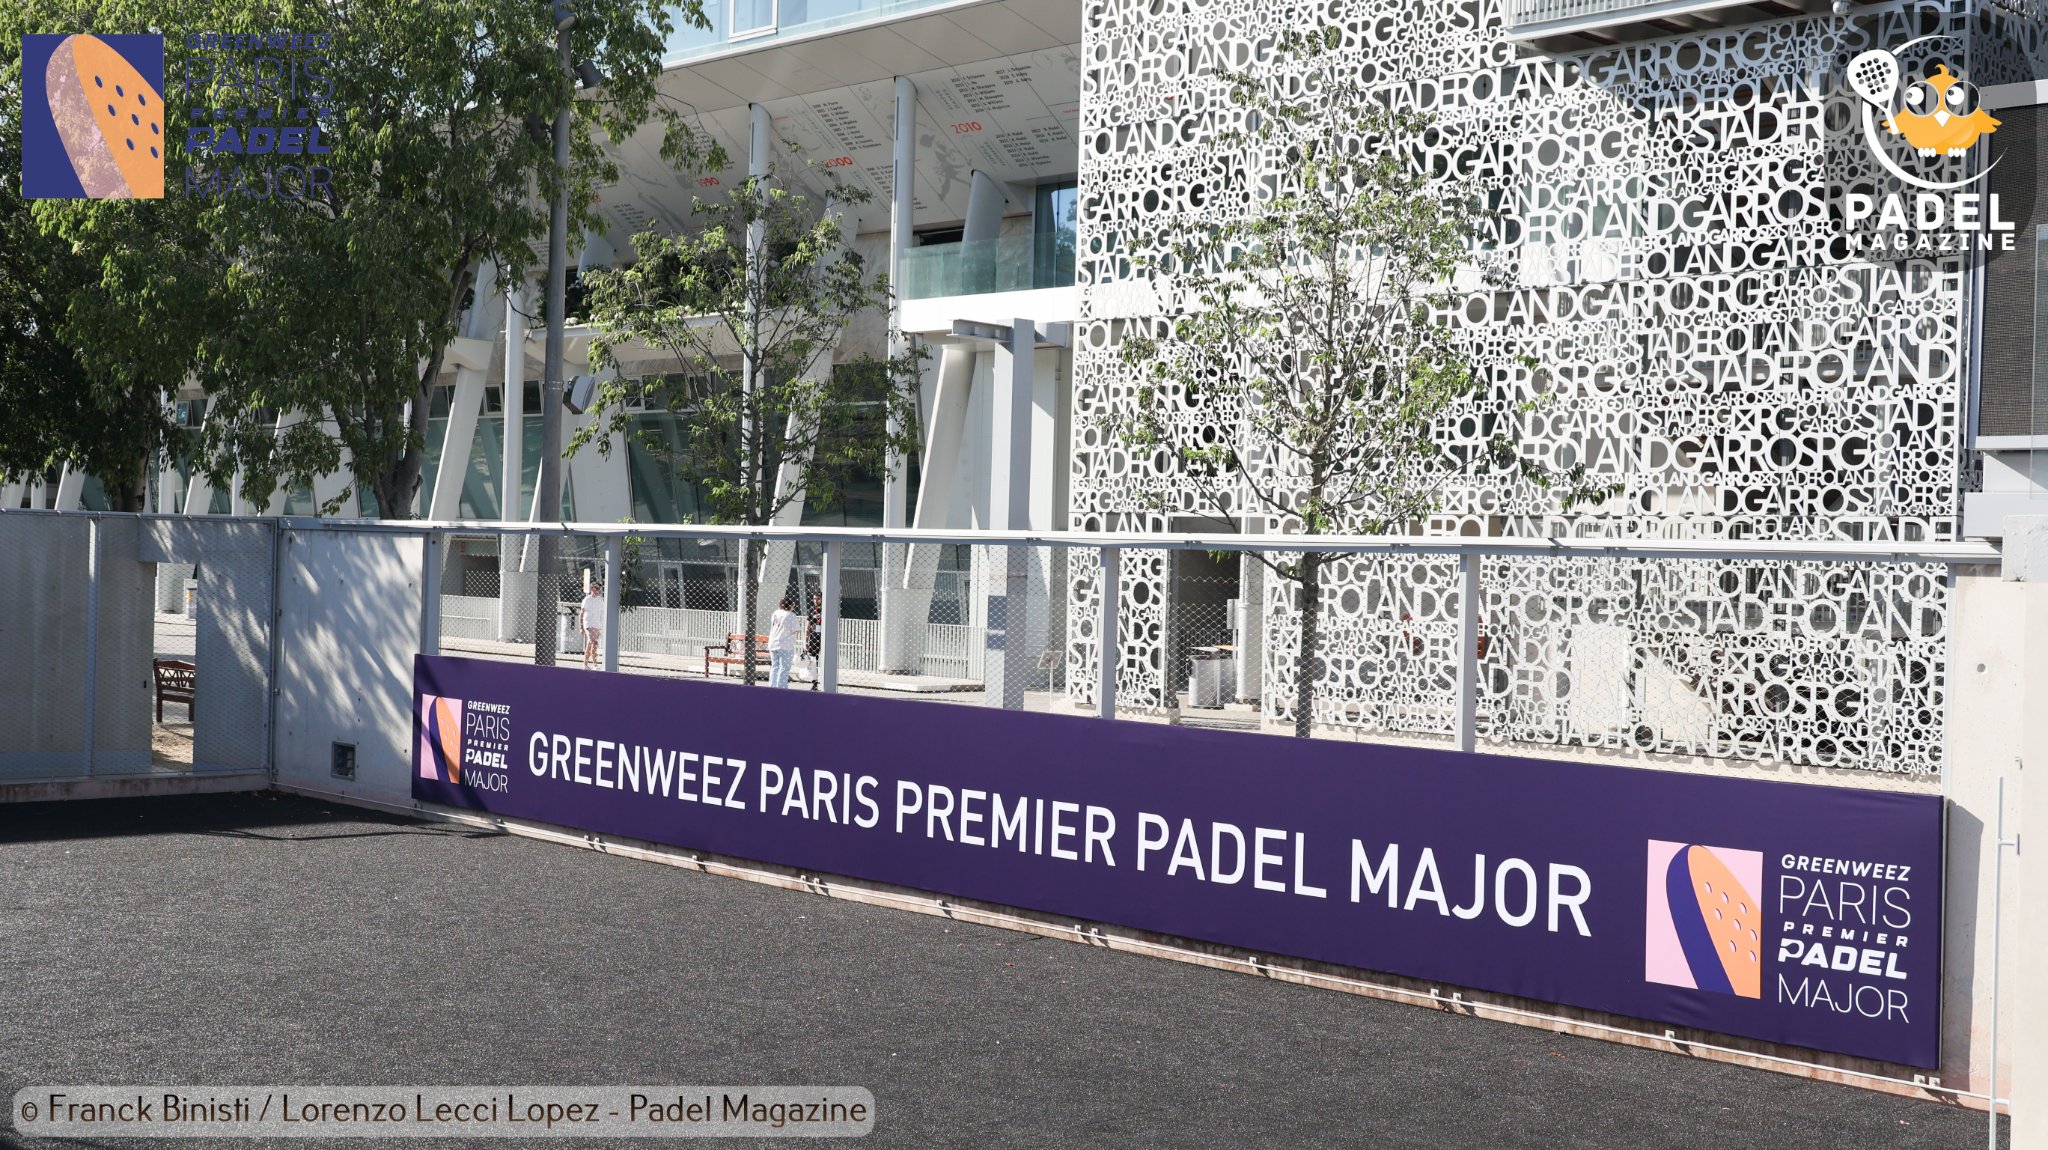 Greenweez Paris Premier Padel Major 2022 年法网